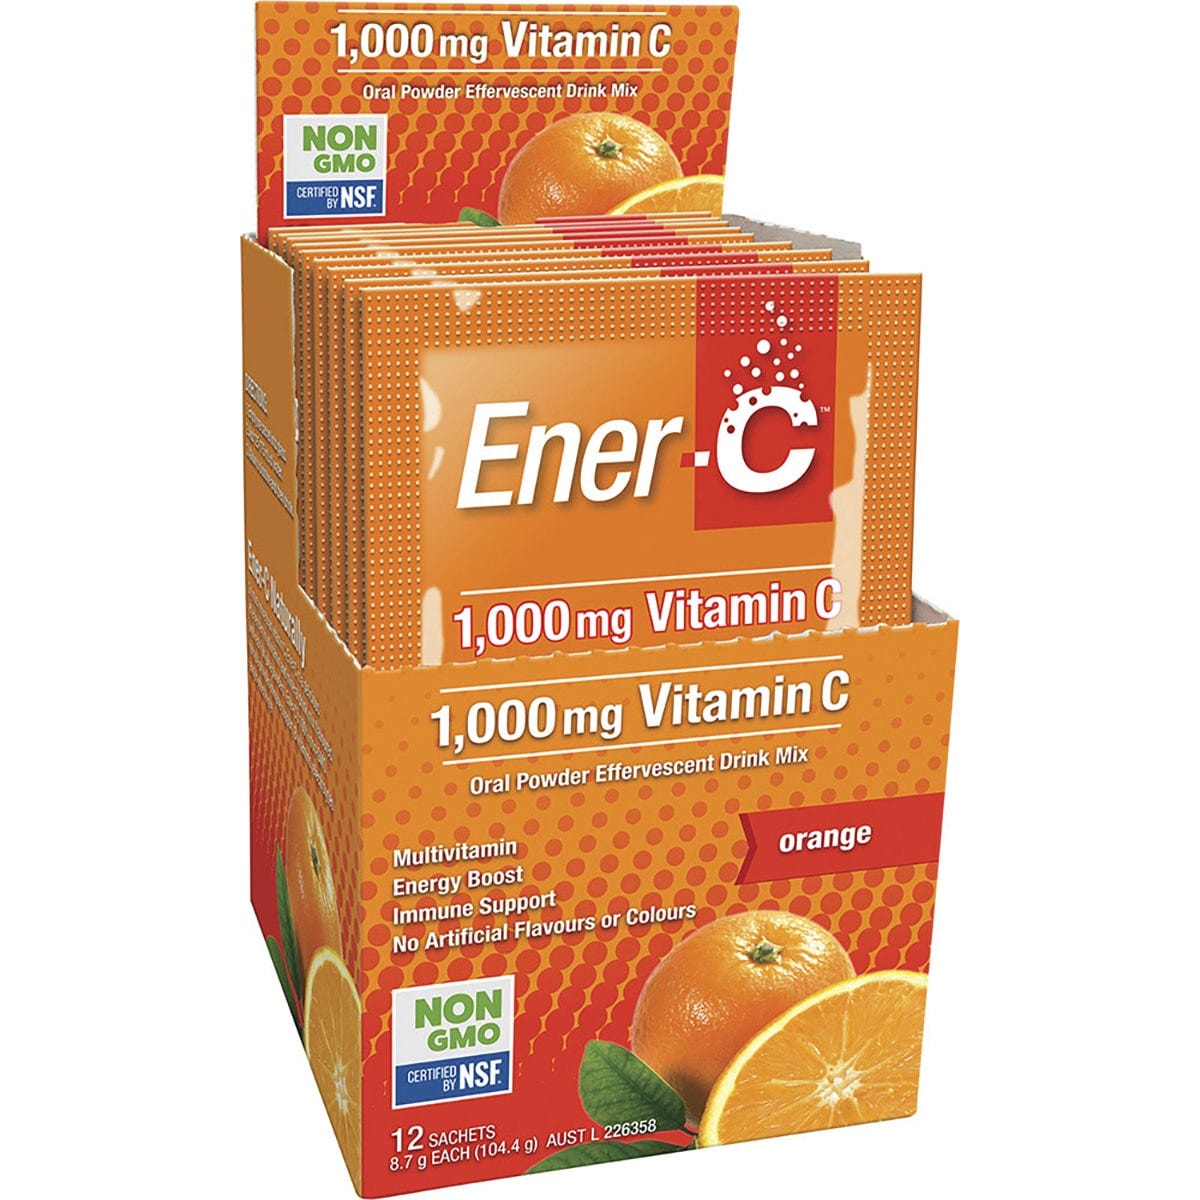 Martin & Pleasance Ener-C 1000mg Vitamin C Drink Mix Orange Sachets